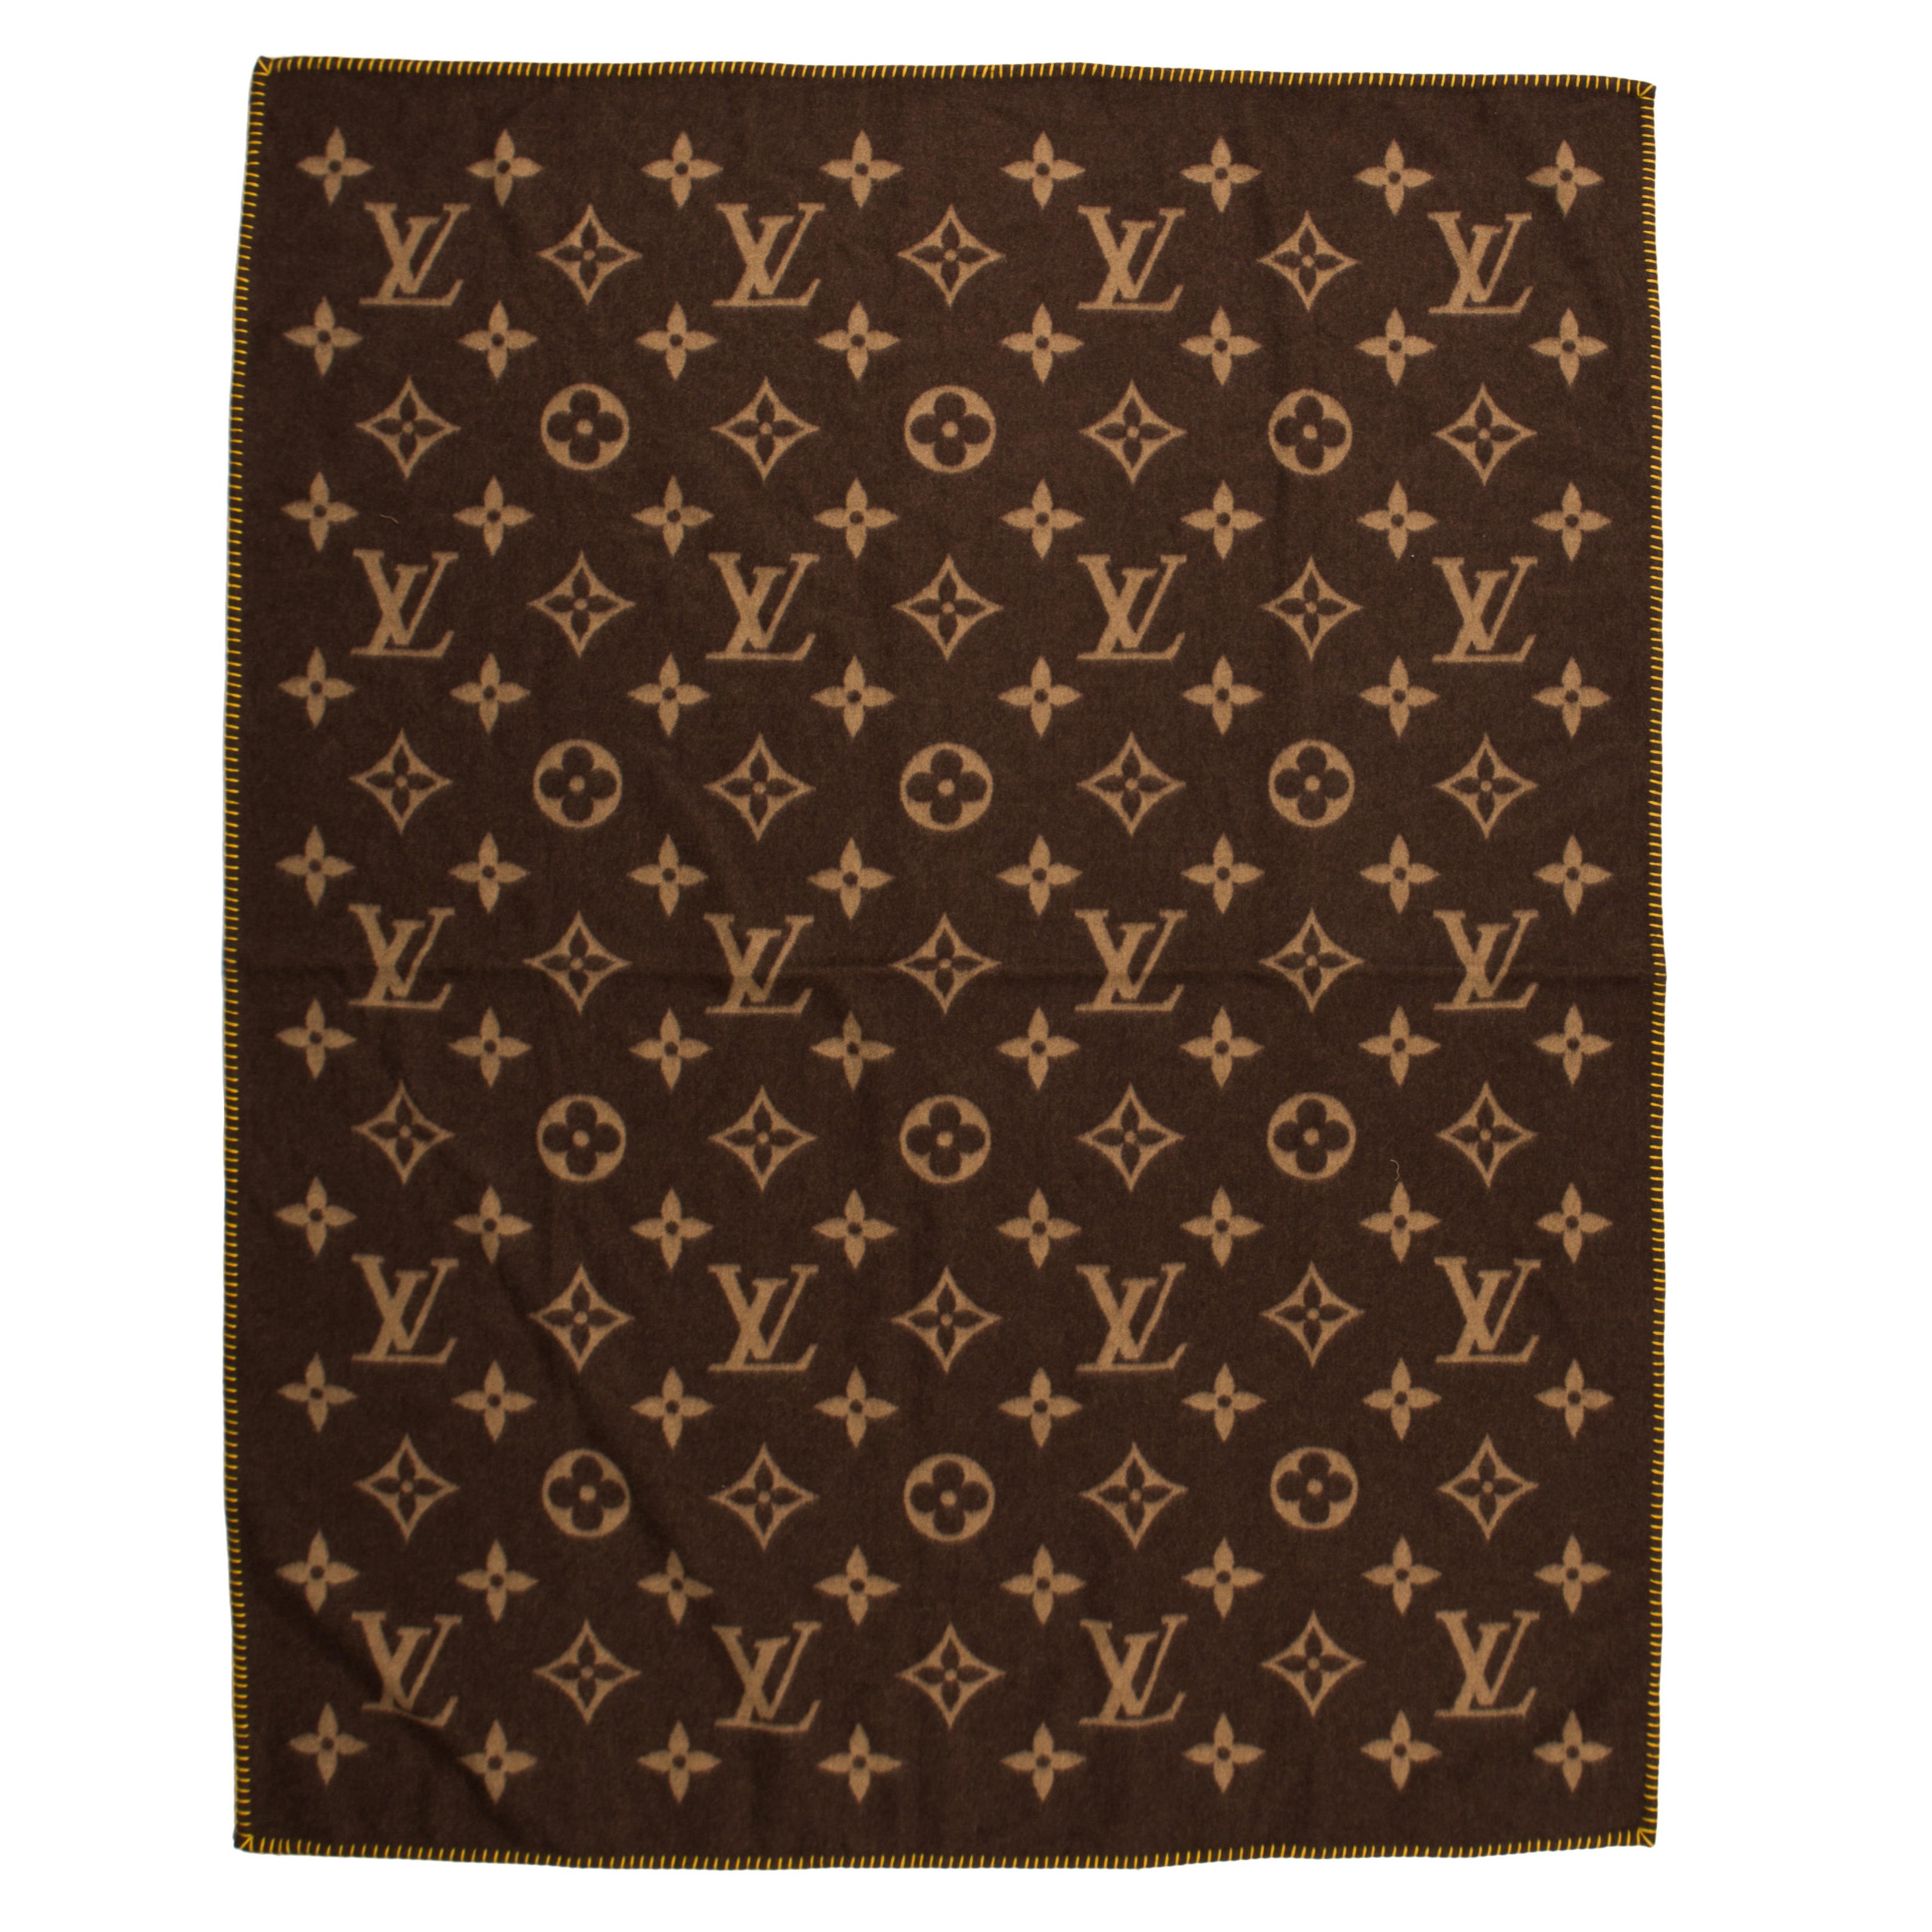 Louis Vuitton Gold Logo Brown Letters Pattern Fleece Blanket - Hot